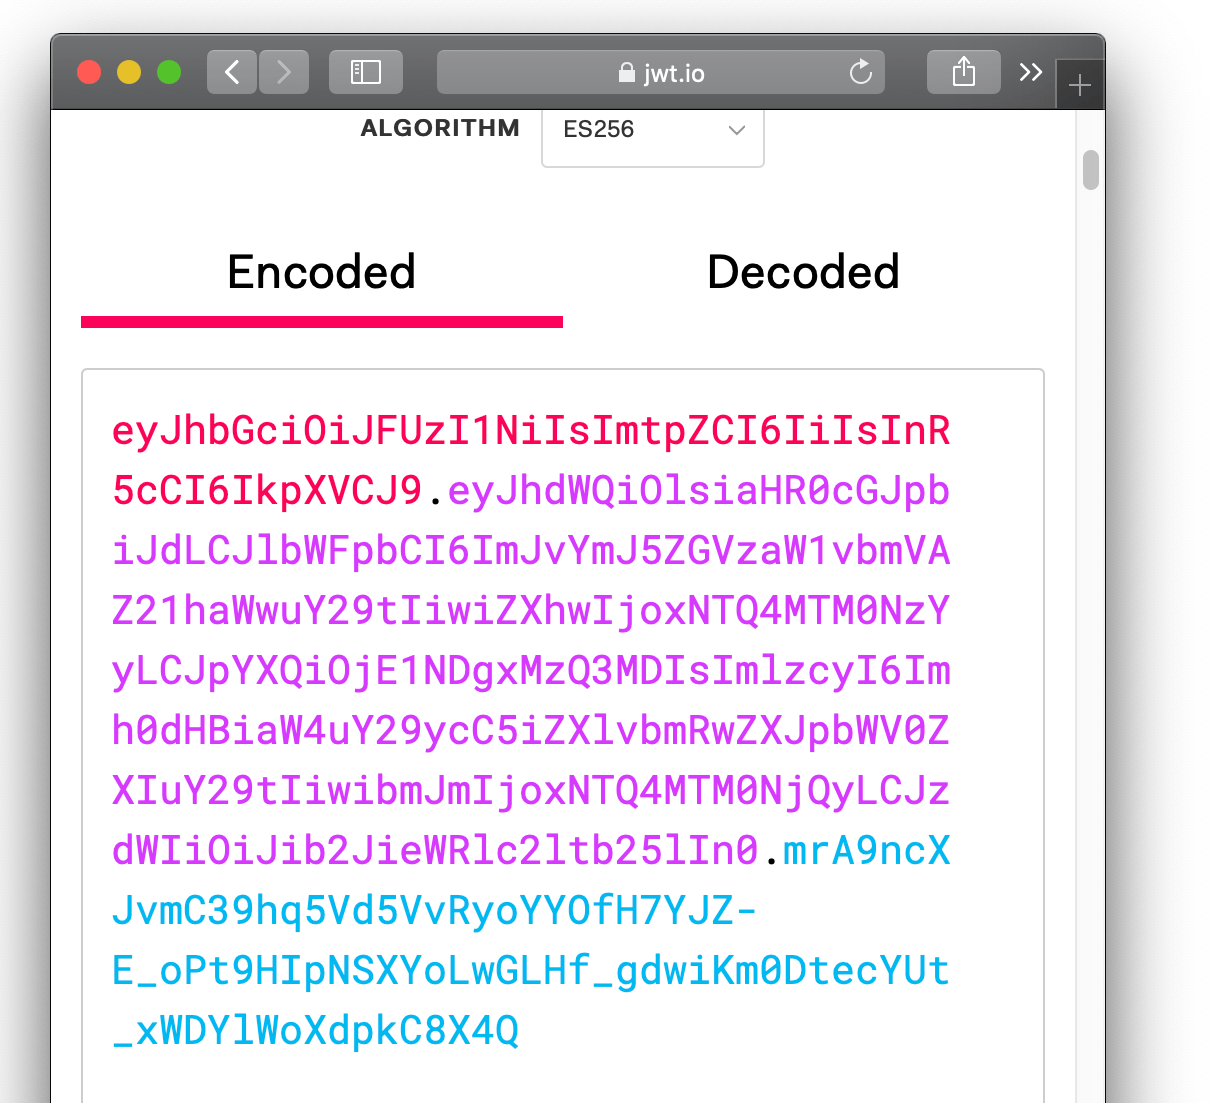 httpbin displaying decoded jwt